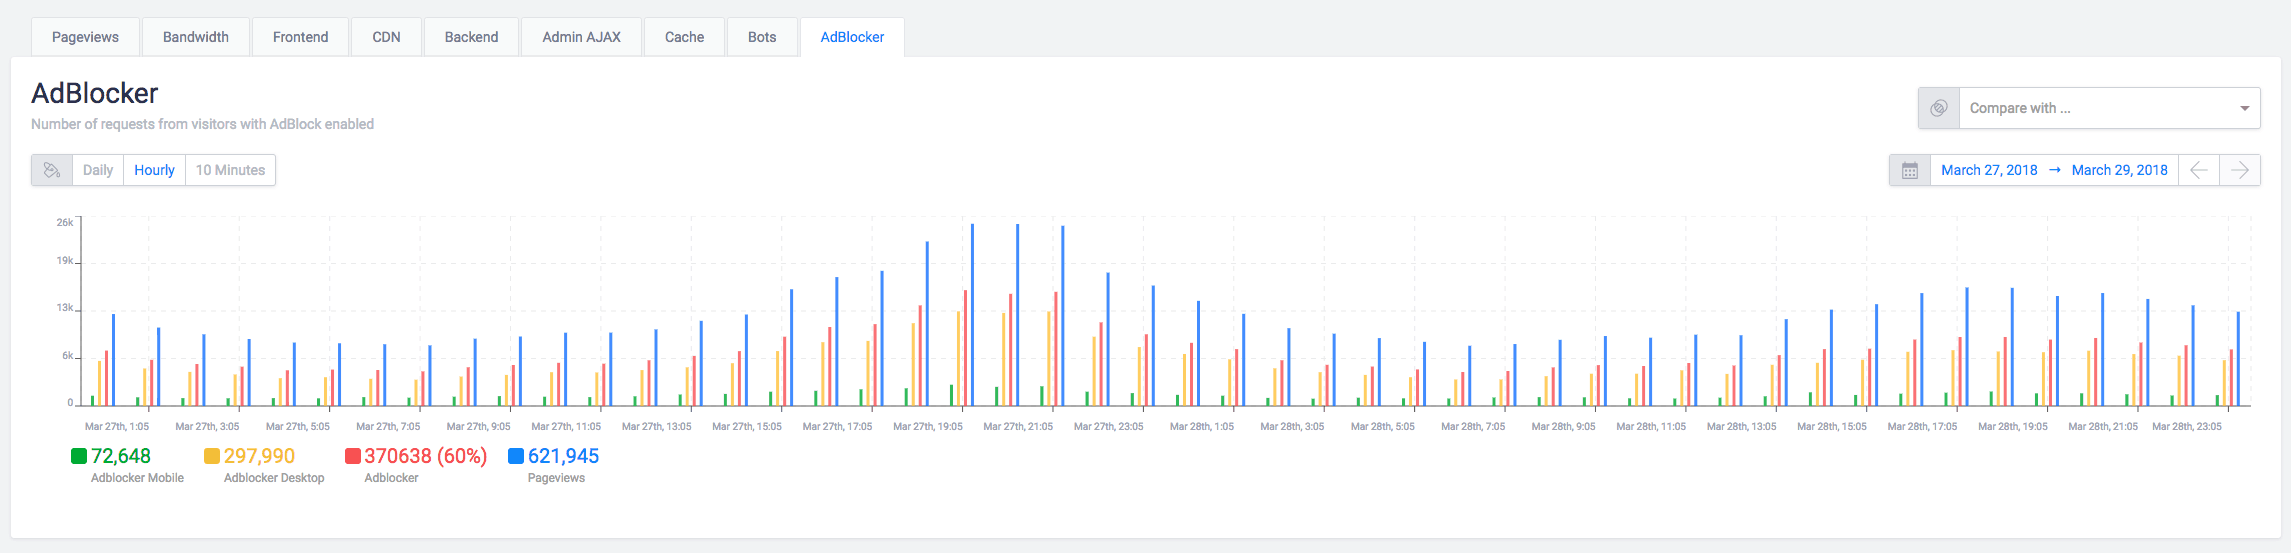 AdBlocker Stats on the Managed Hosting Dashboard